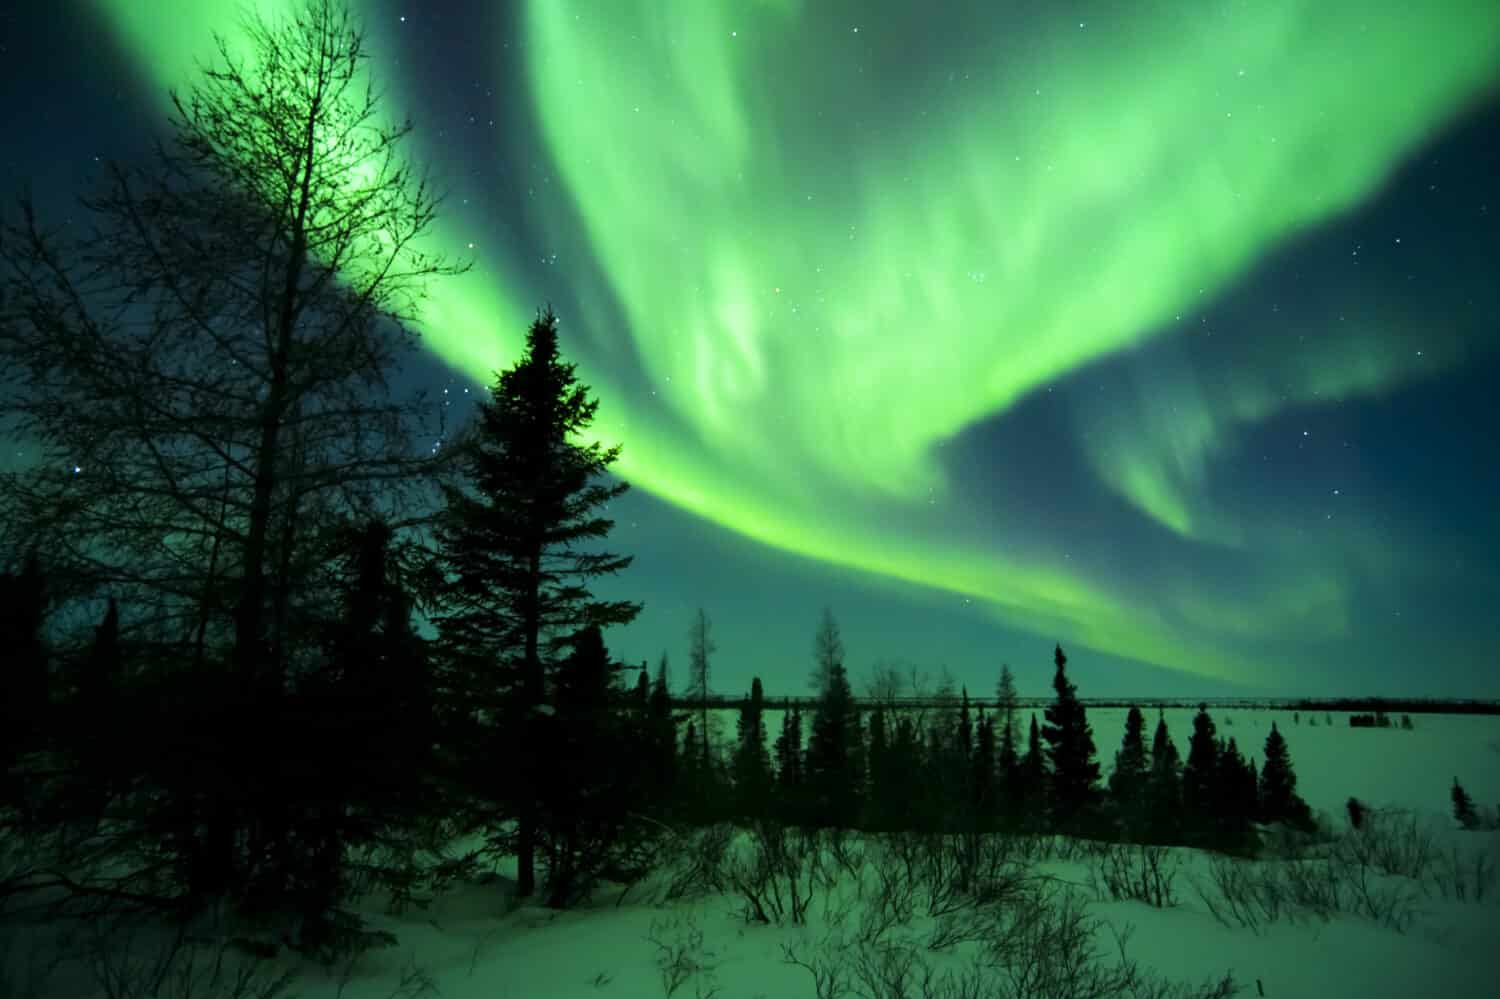 Night sky lit up with aurora borealis, northern lights, Wapusk national park, Manitoba, Canada.